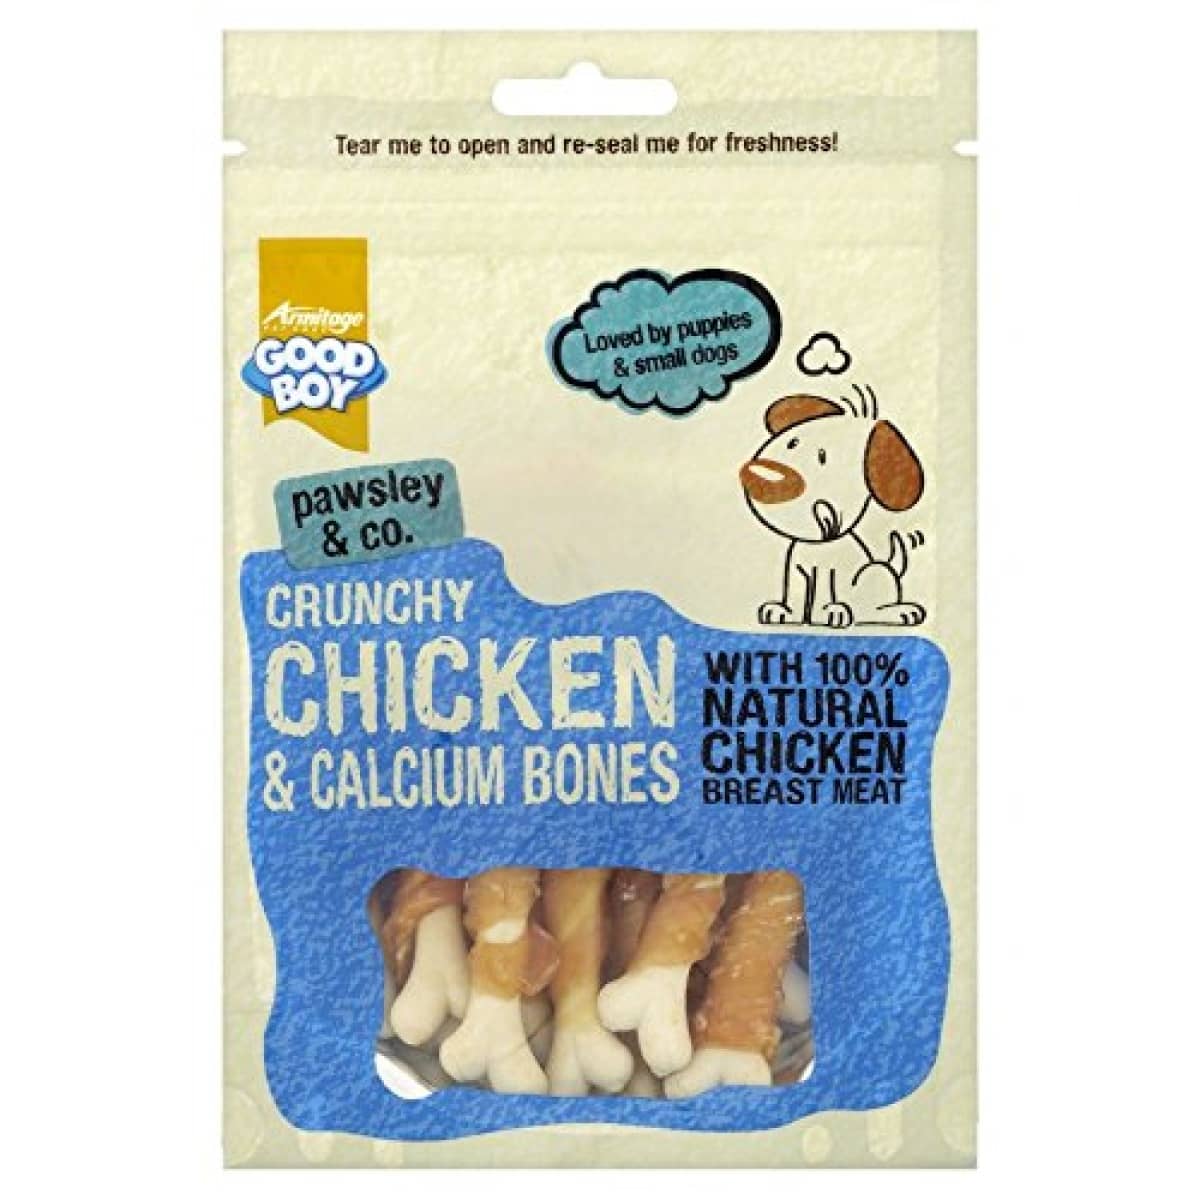 Good Boy Chicken Calcium Bones 100g Main Image